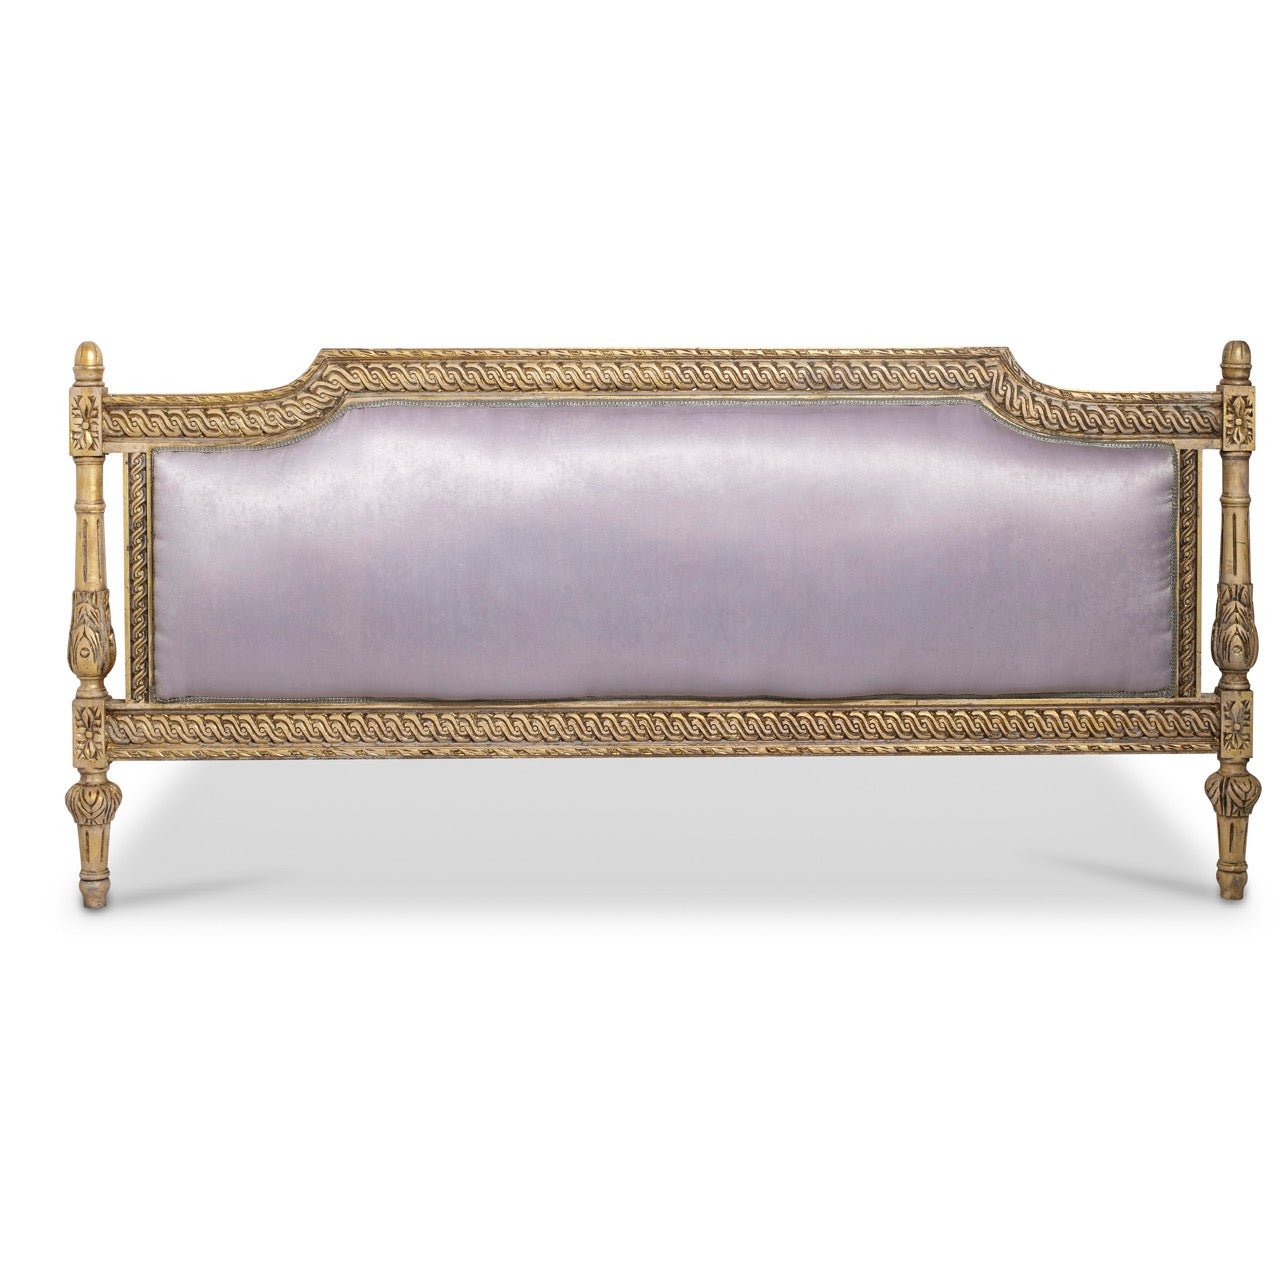 Lavender Upholstered French Square Bed Set